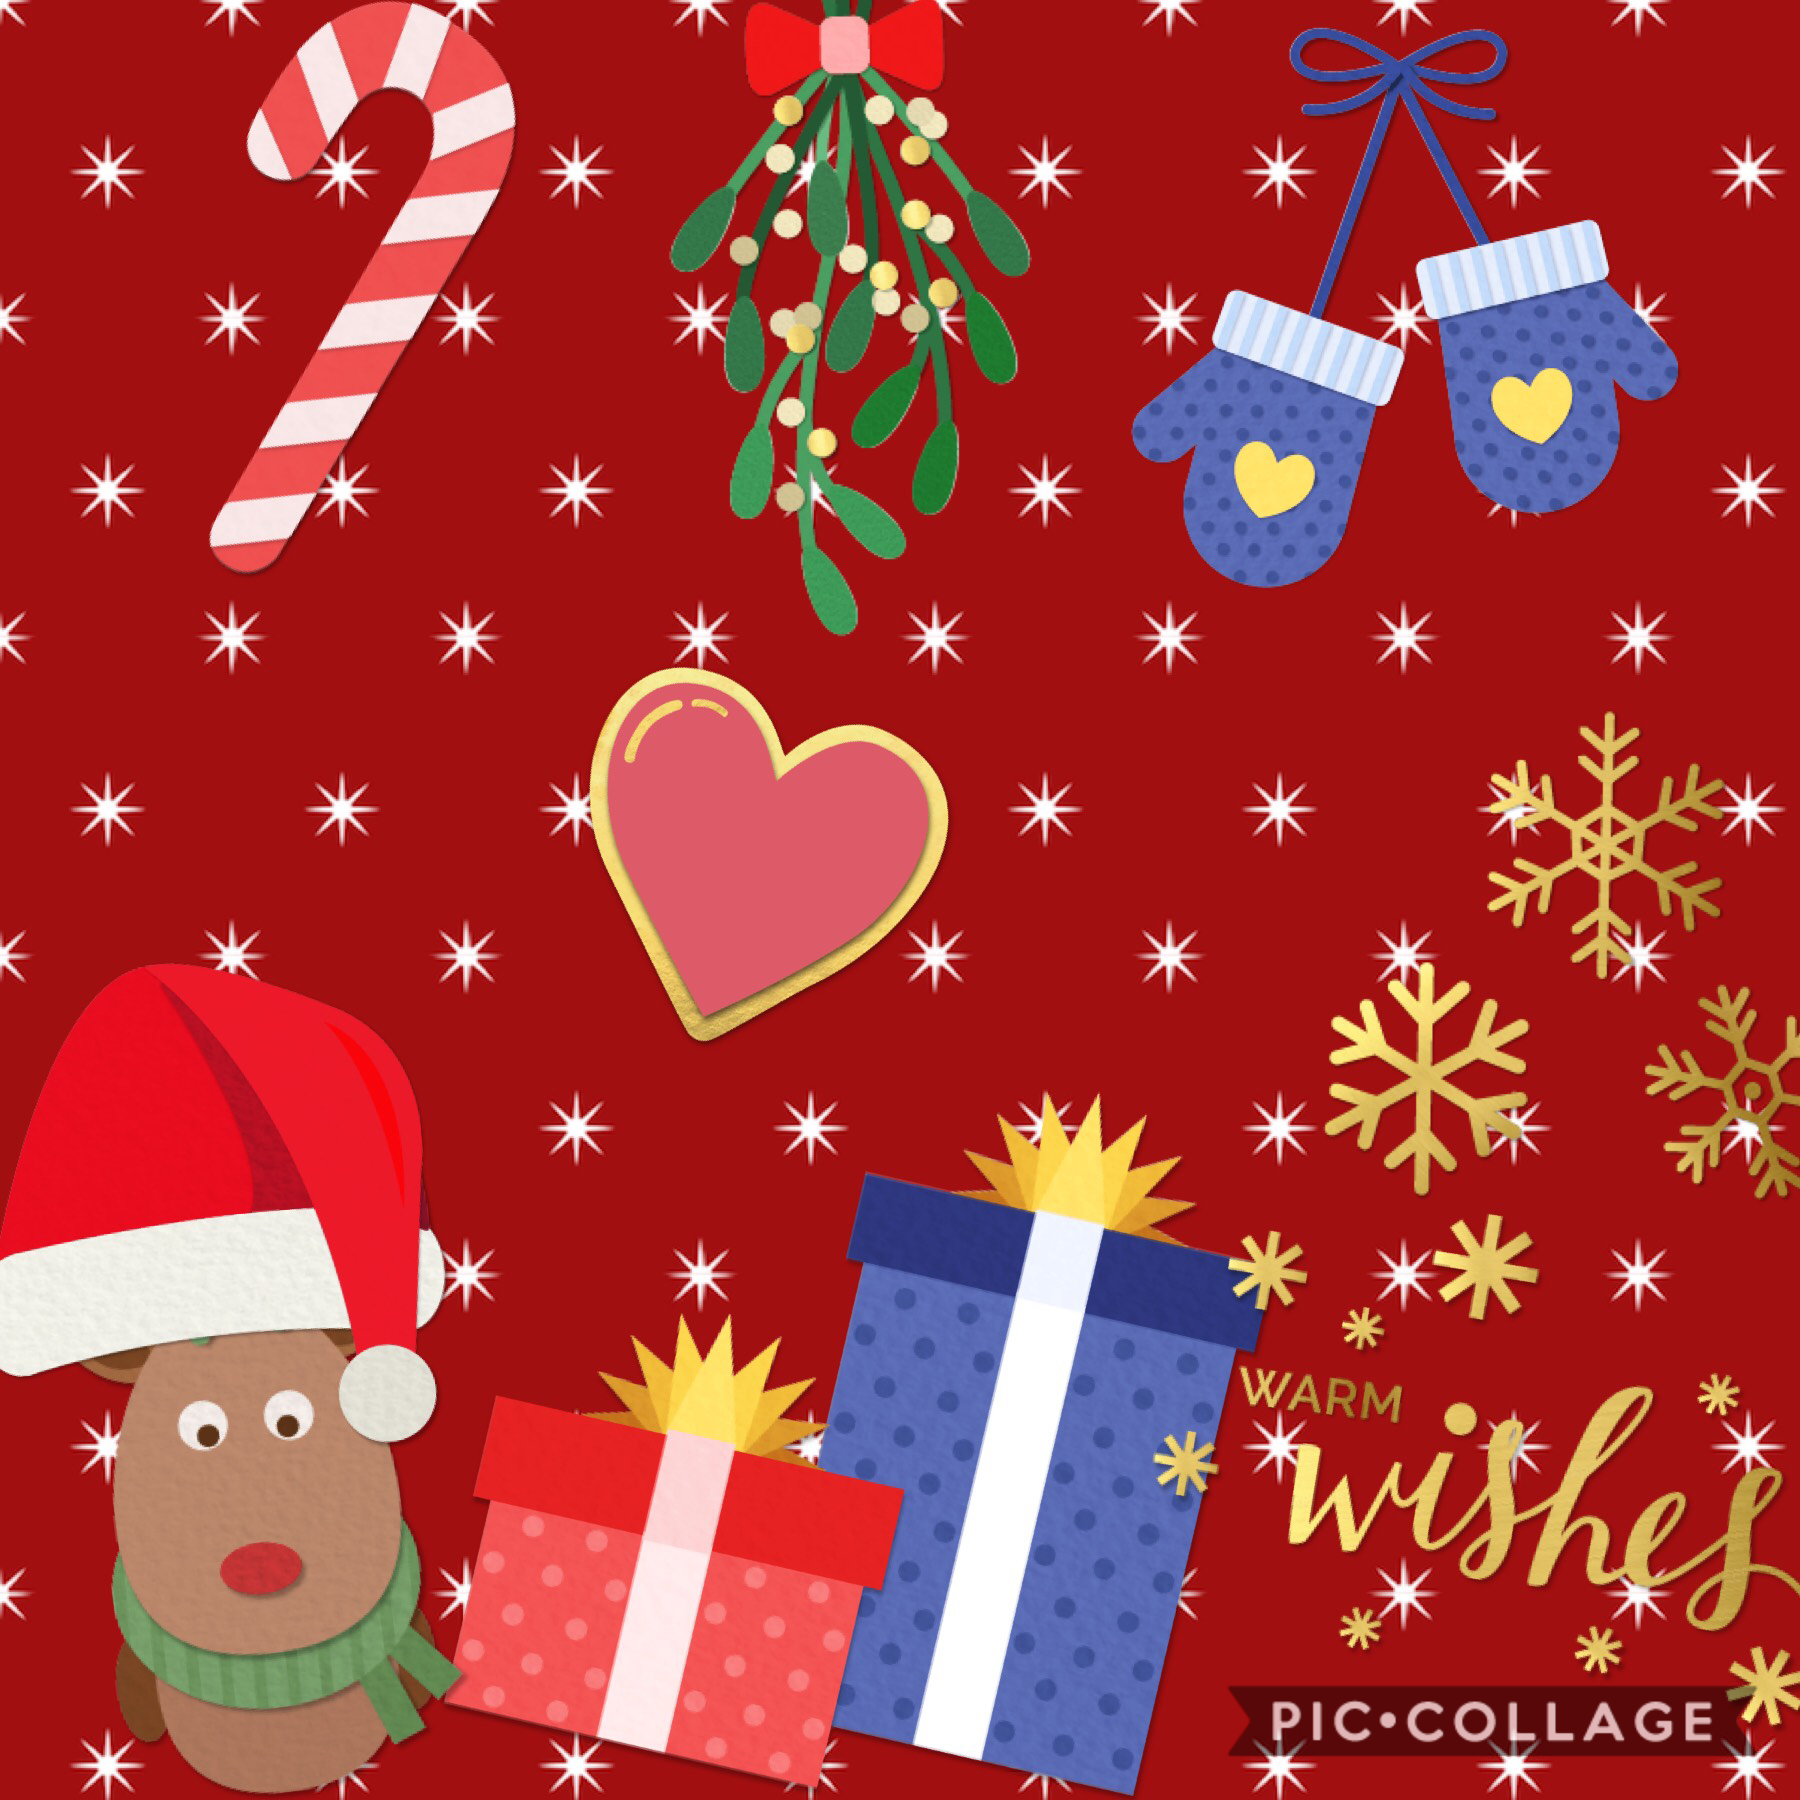 Merry christmas!!
Love ya’ll!!♥️♥️